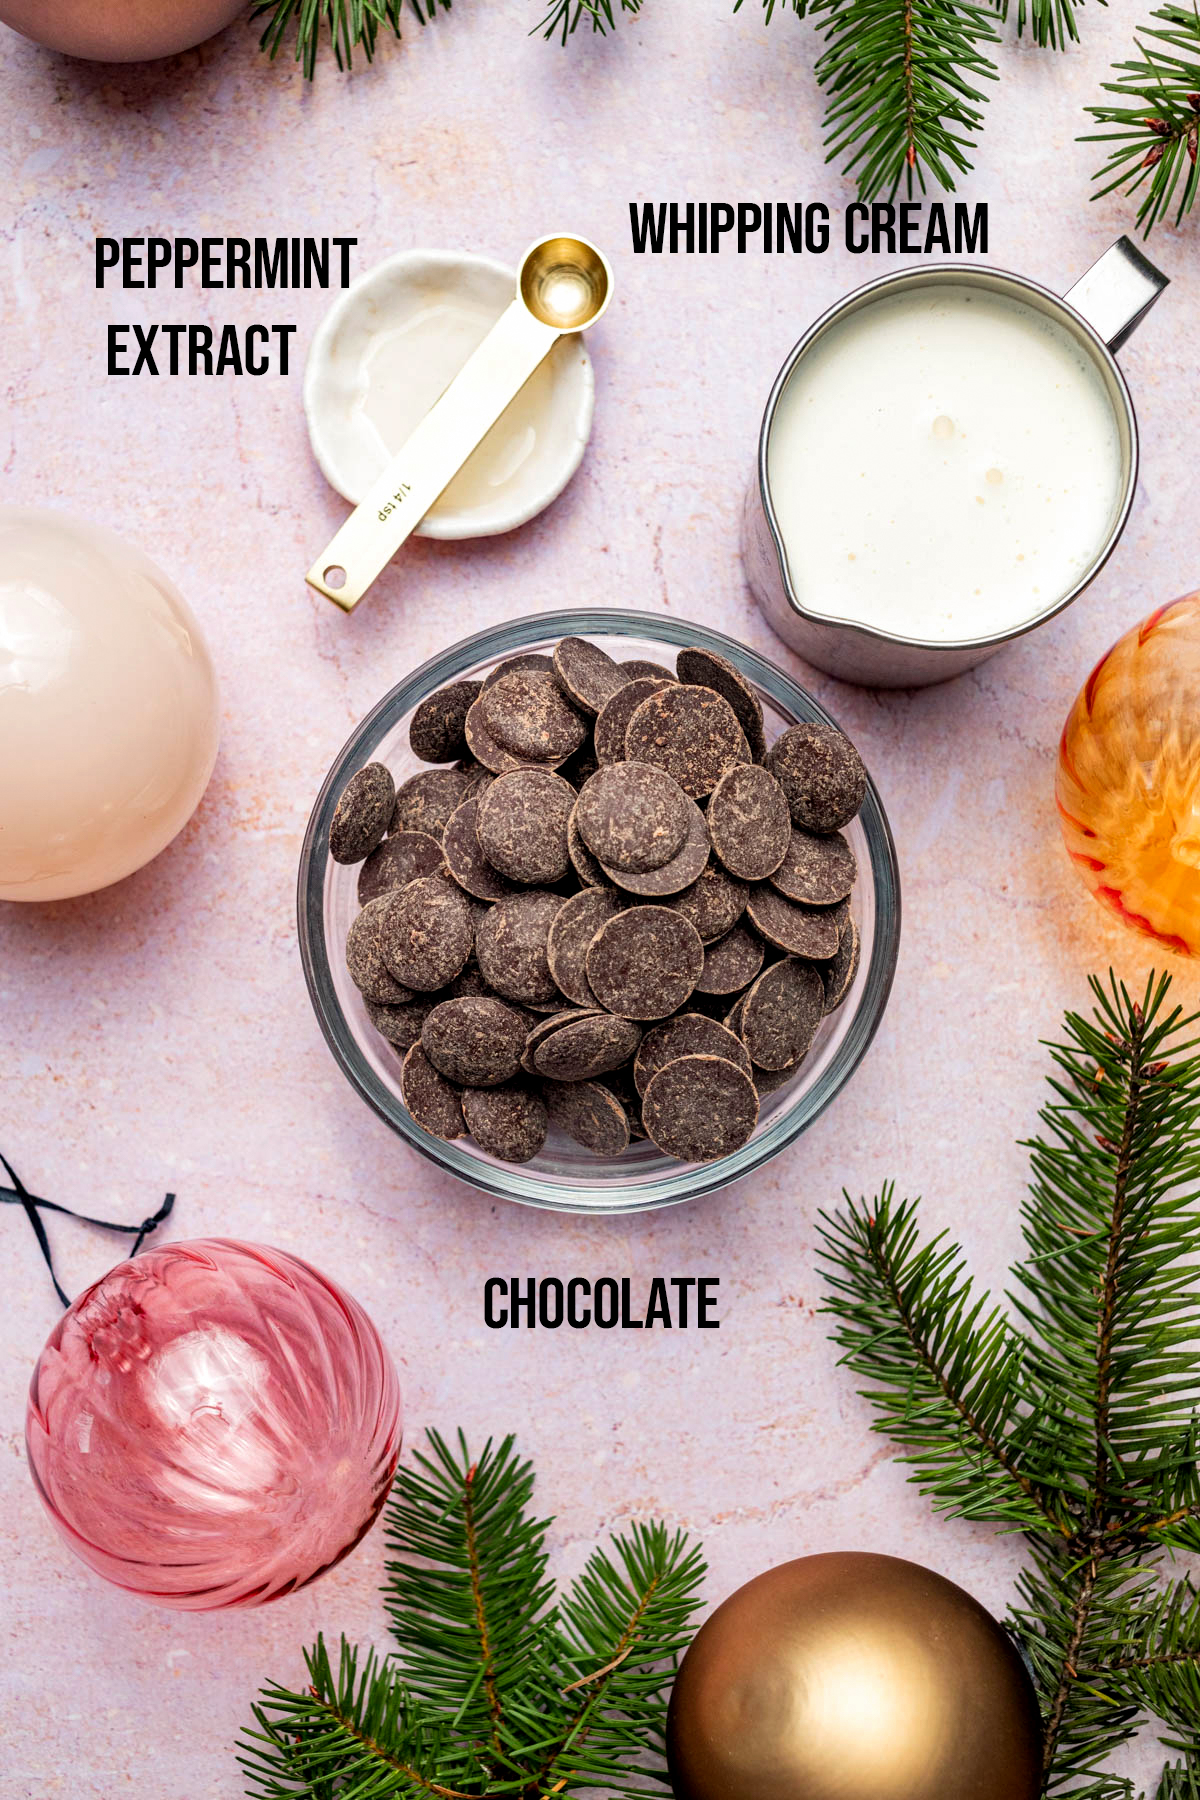 Mint chocolate truffle ingredients.